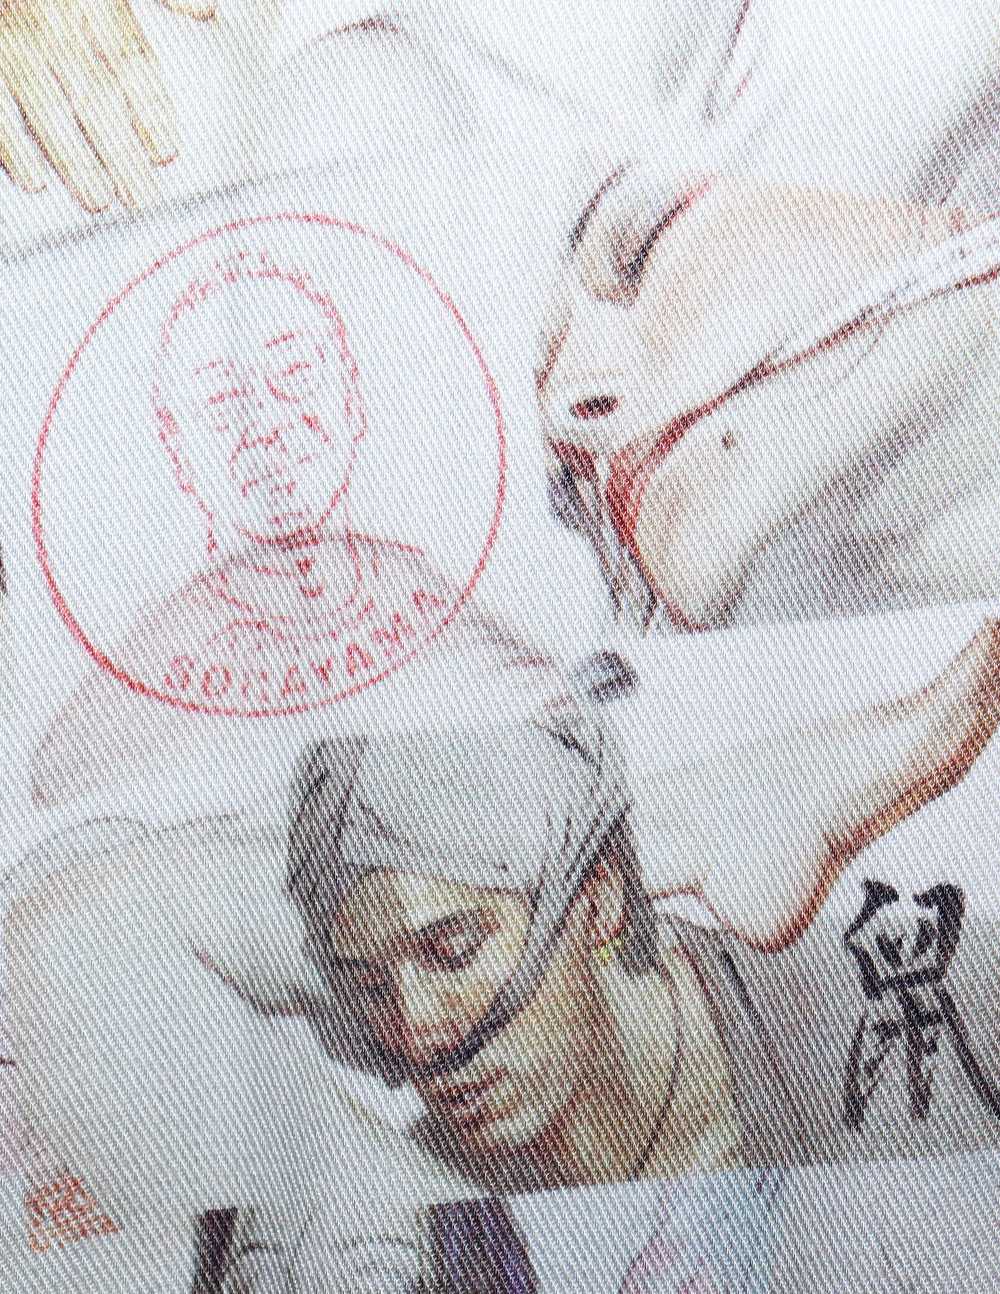 X-Large Sorayama 'Erotica' Rayon Shirt - image 7